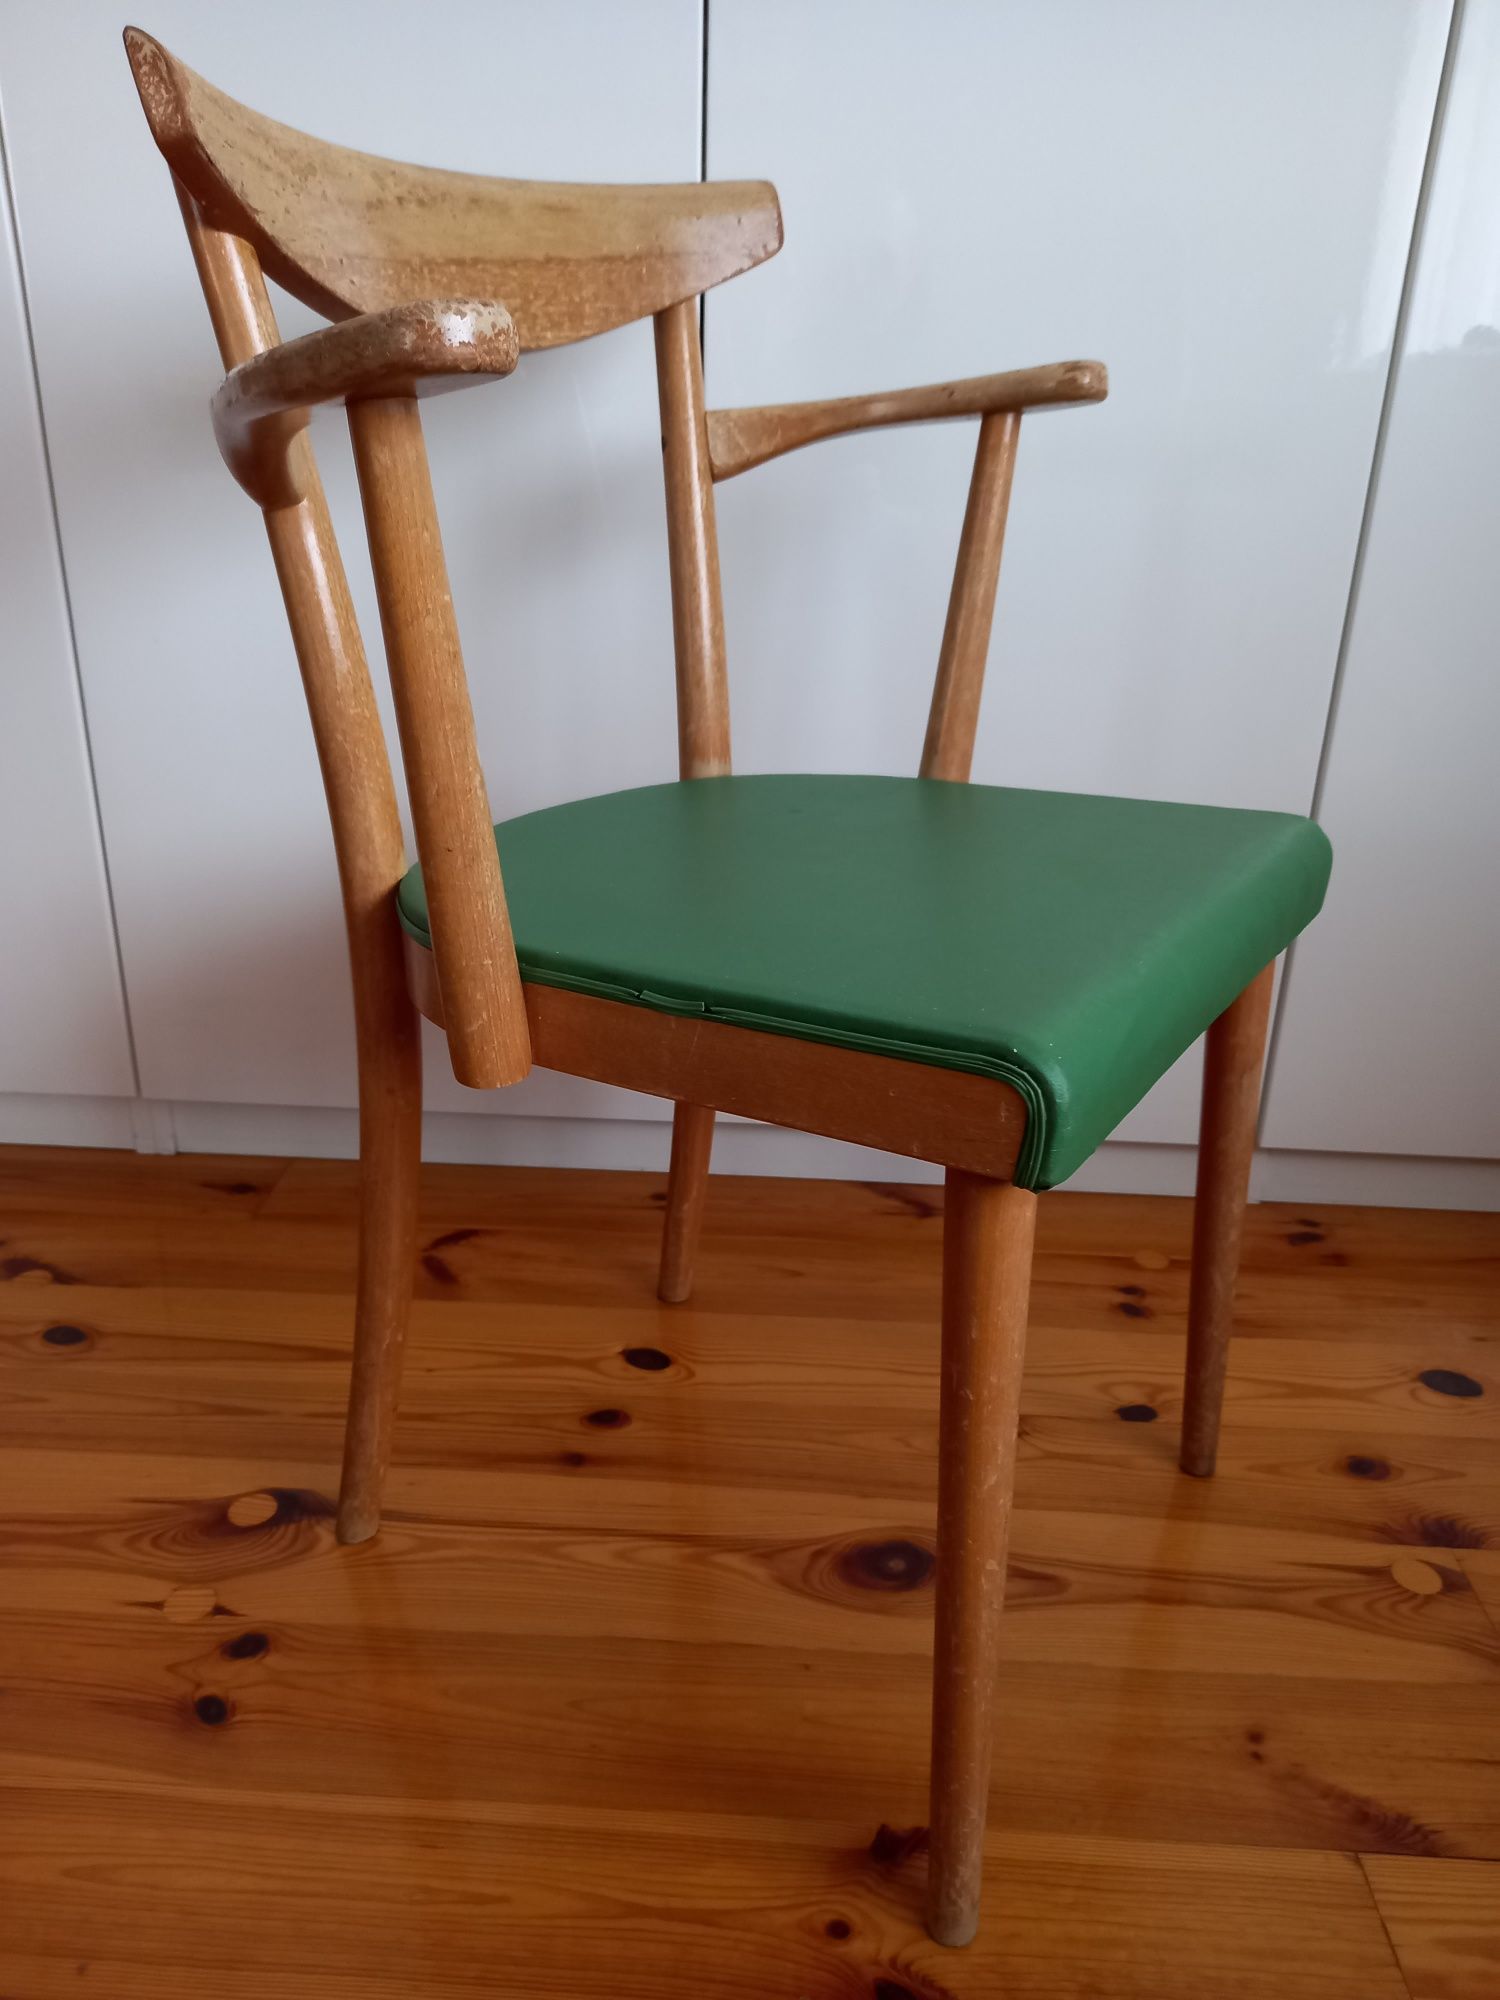 Stare unikatowe krzesło PRL vintage